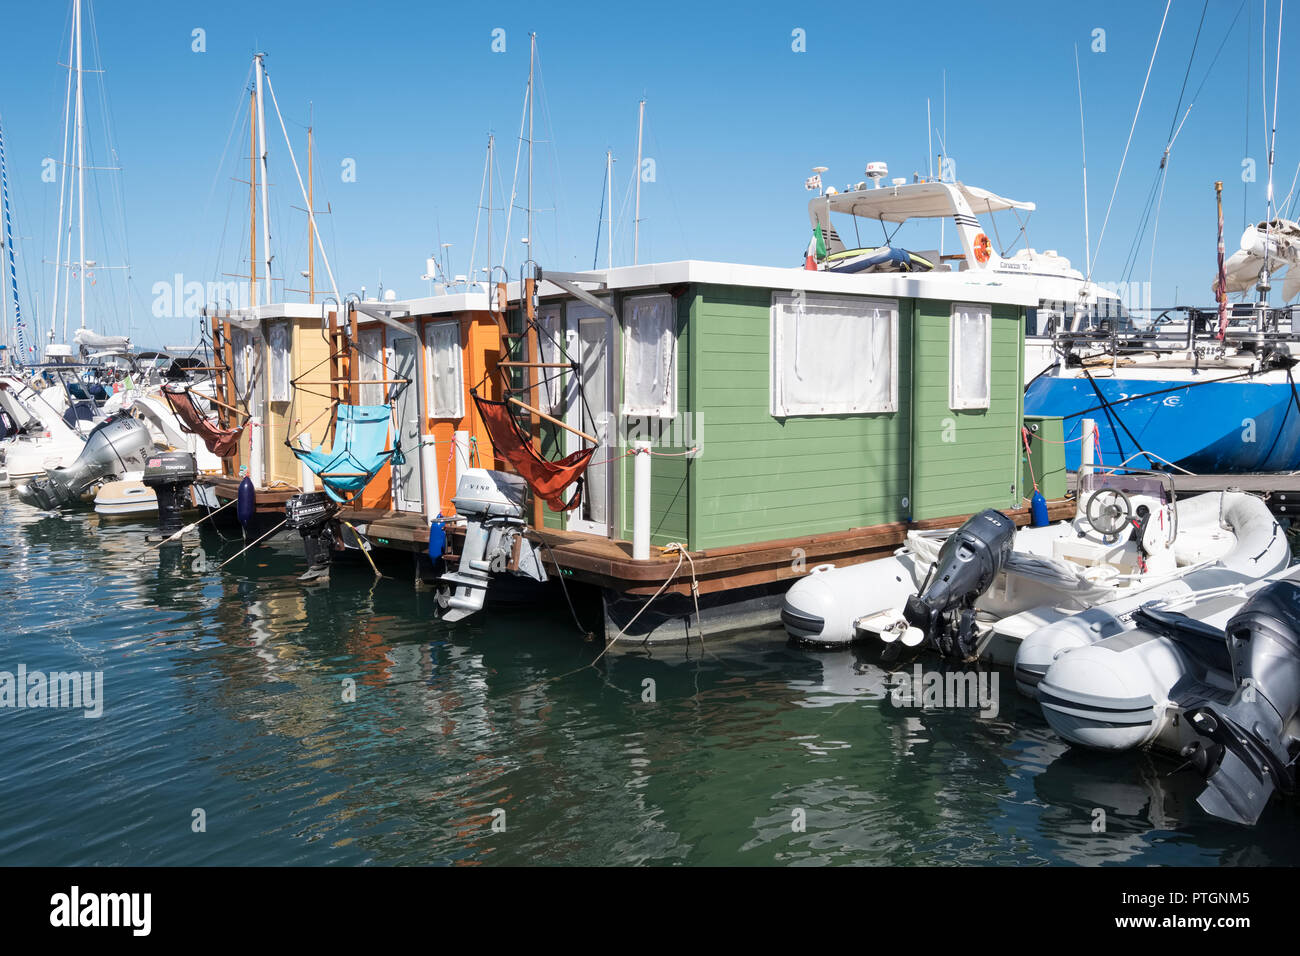 Location de bateaux à Maison de vacances hébergement location Marina Acquatica Porto di Alghero Aquatica Marina Port d'Alghero, Sardaigne, Italie Banque D'Images